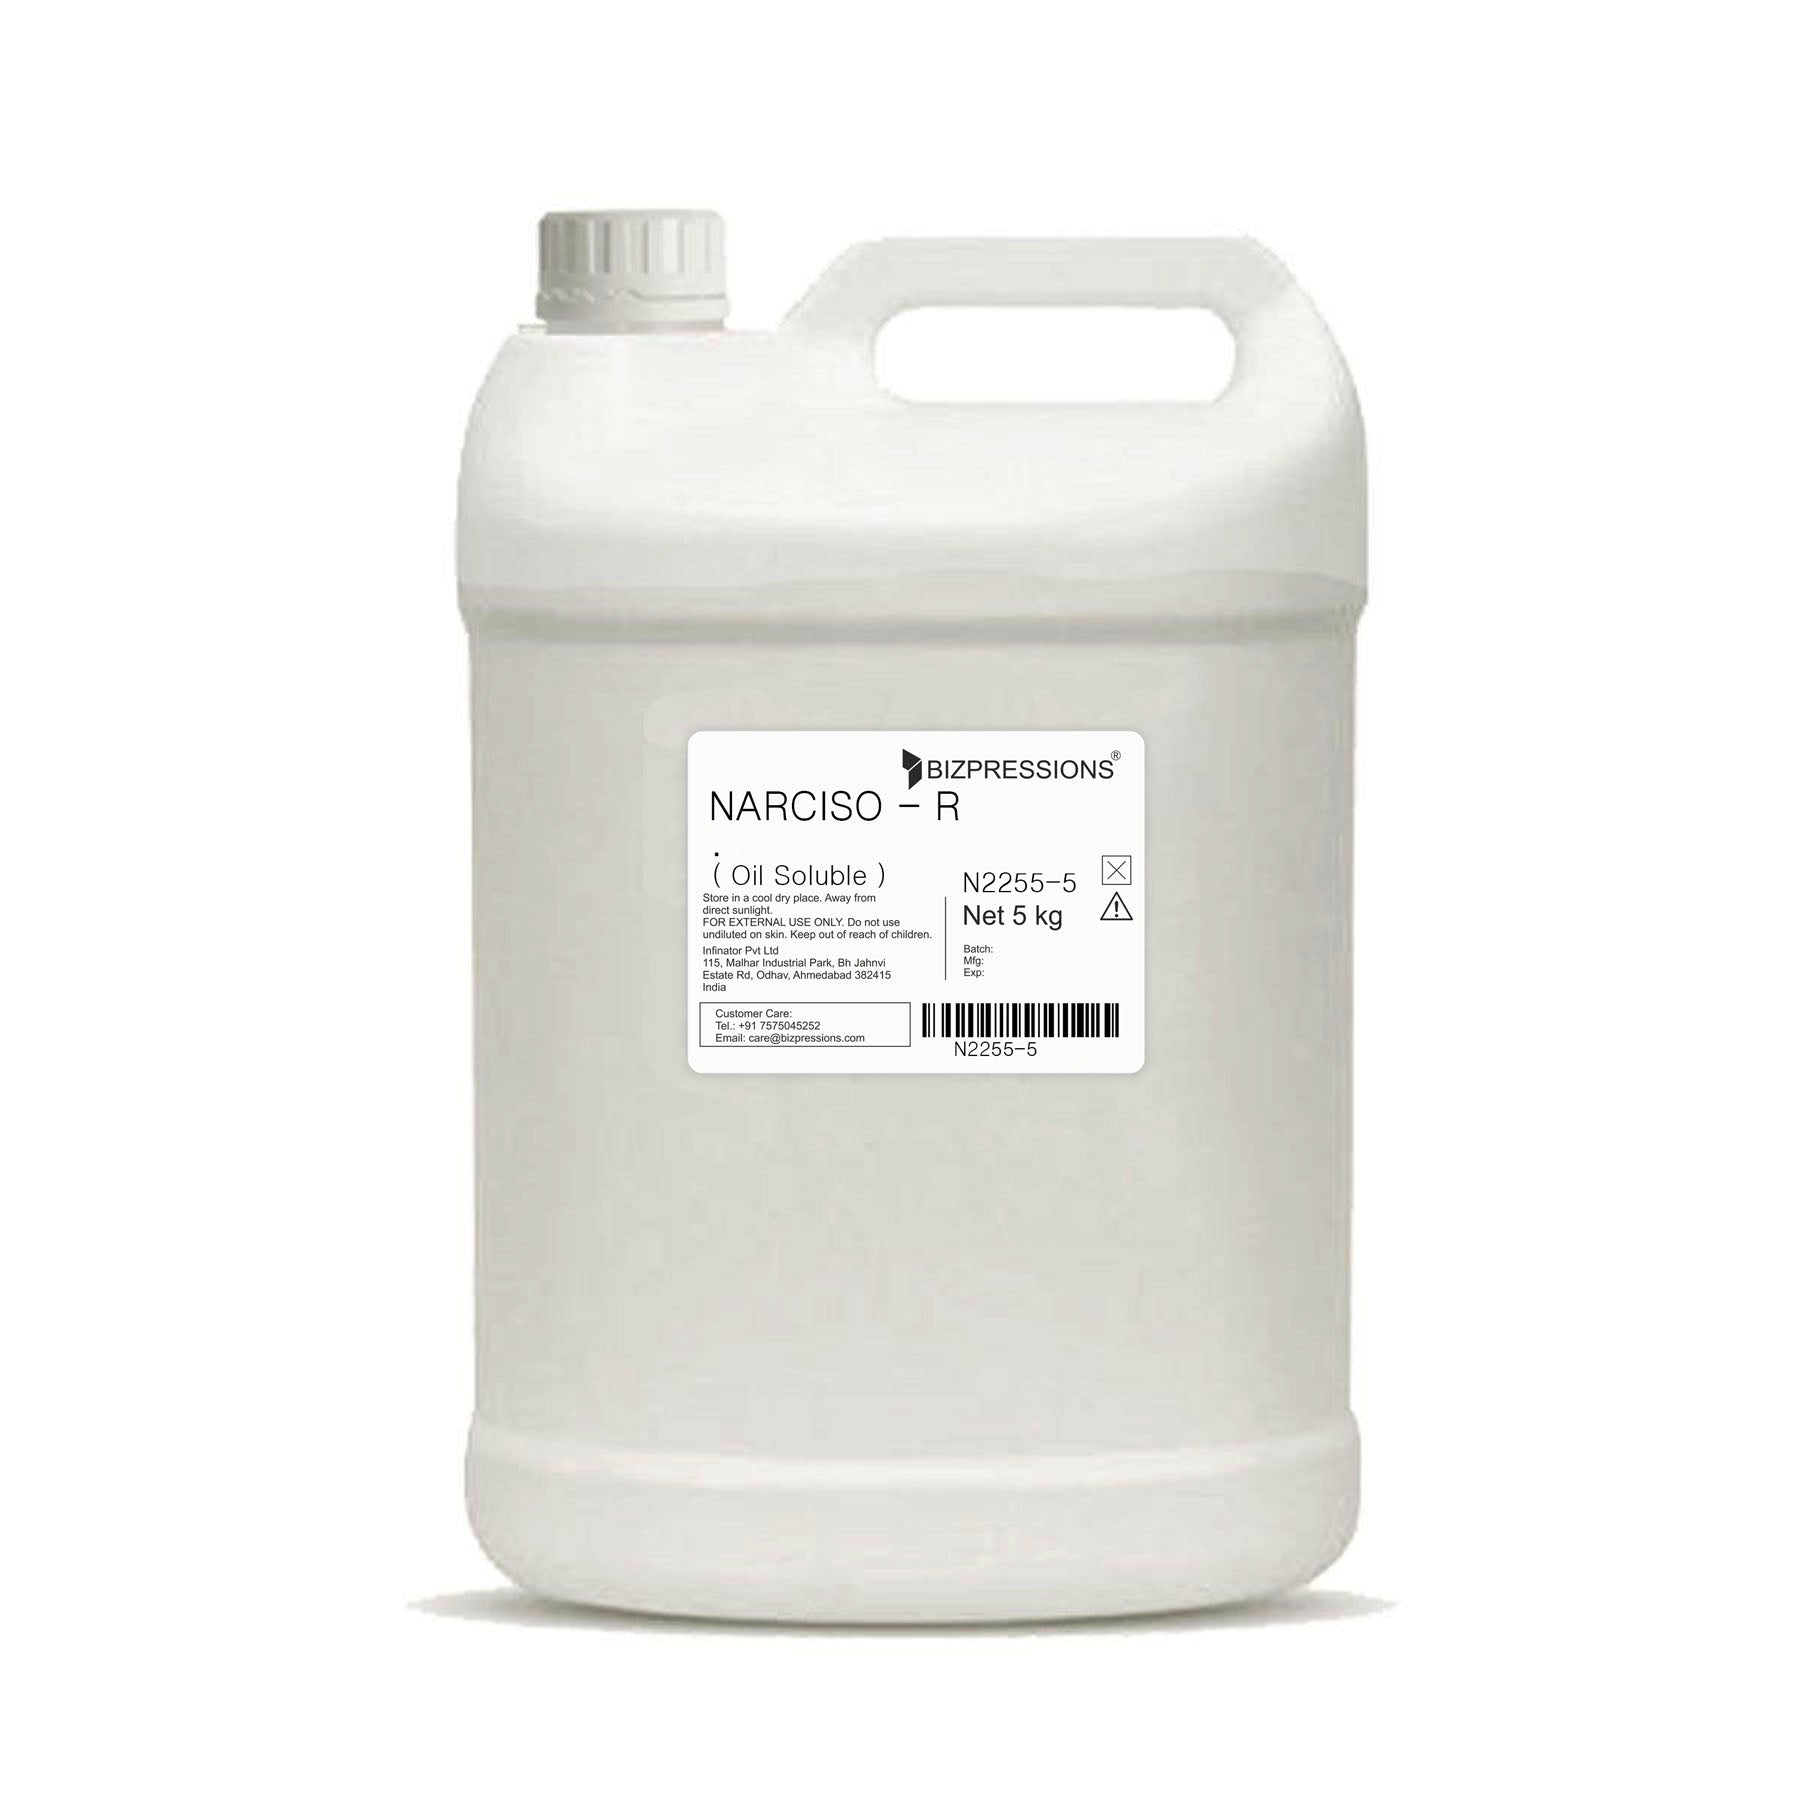 NARCISO - R - Fragrance ( Oil Soluble ) - 5 kg